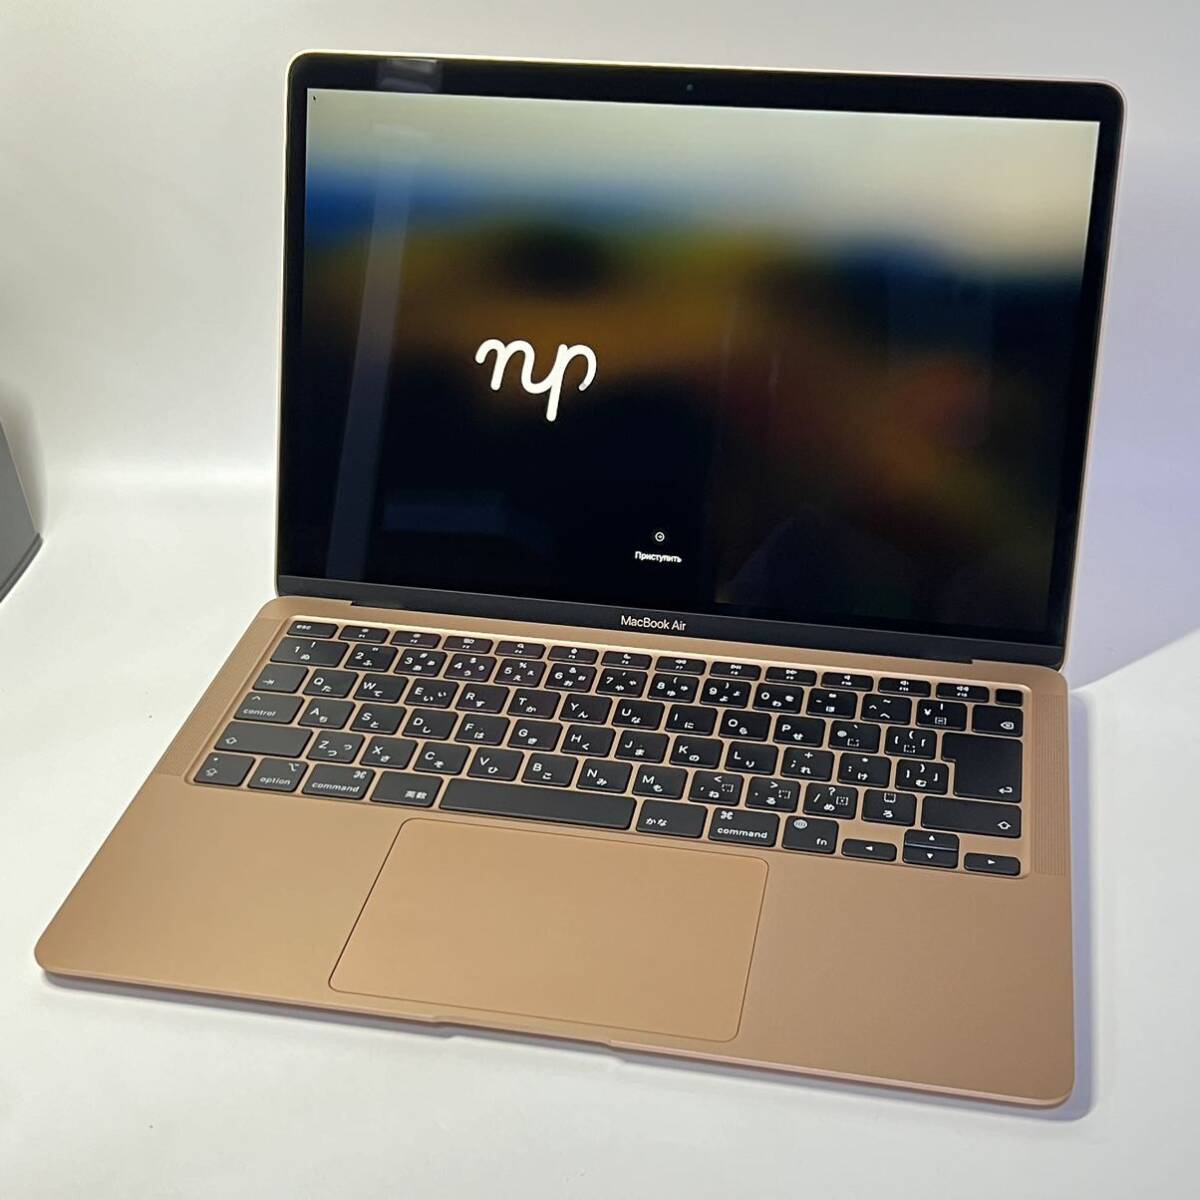 Yahoo!オークション -「macbook 12 inch」(MacBook Air) (ノートブック 